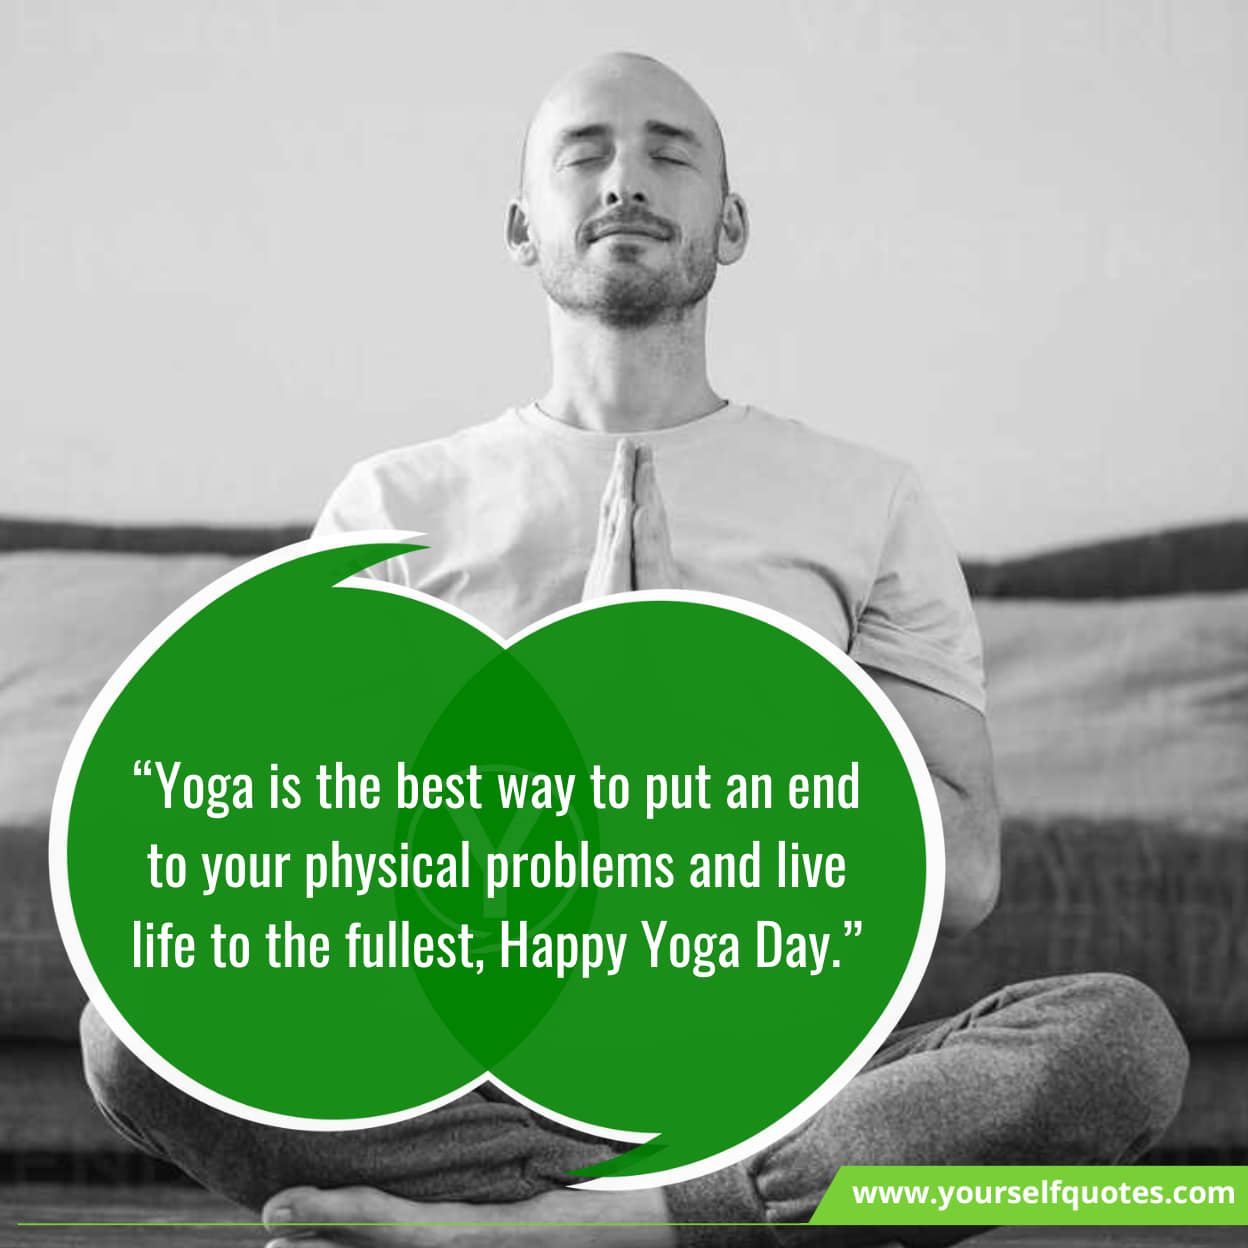 Yoga Day Sayings & Greetings